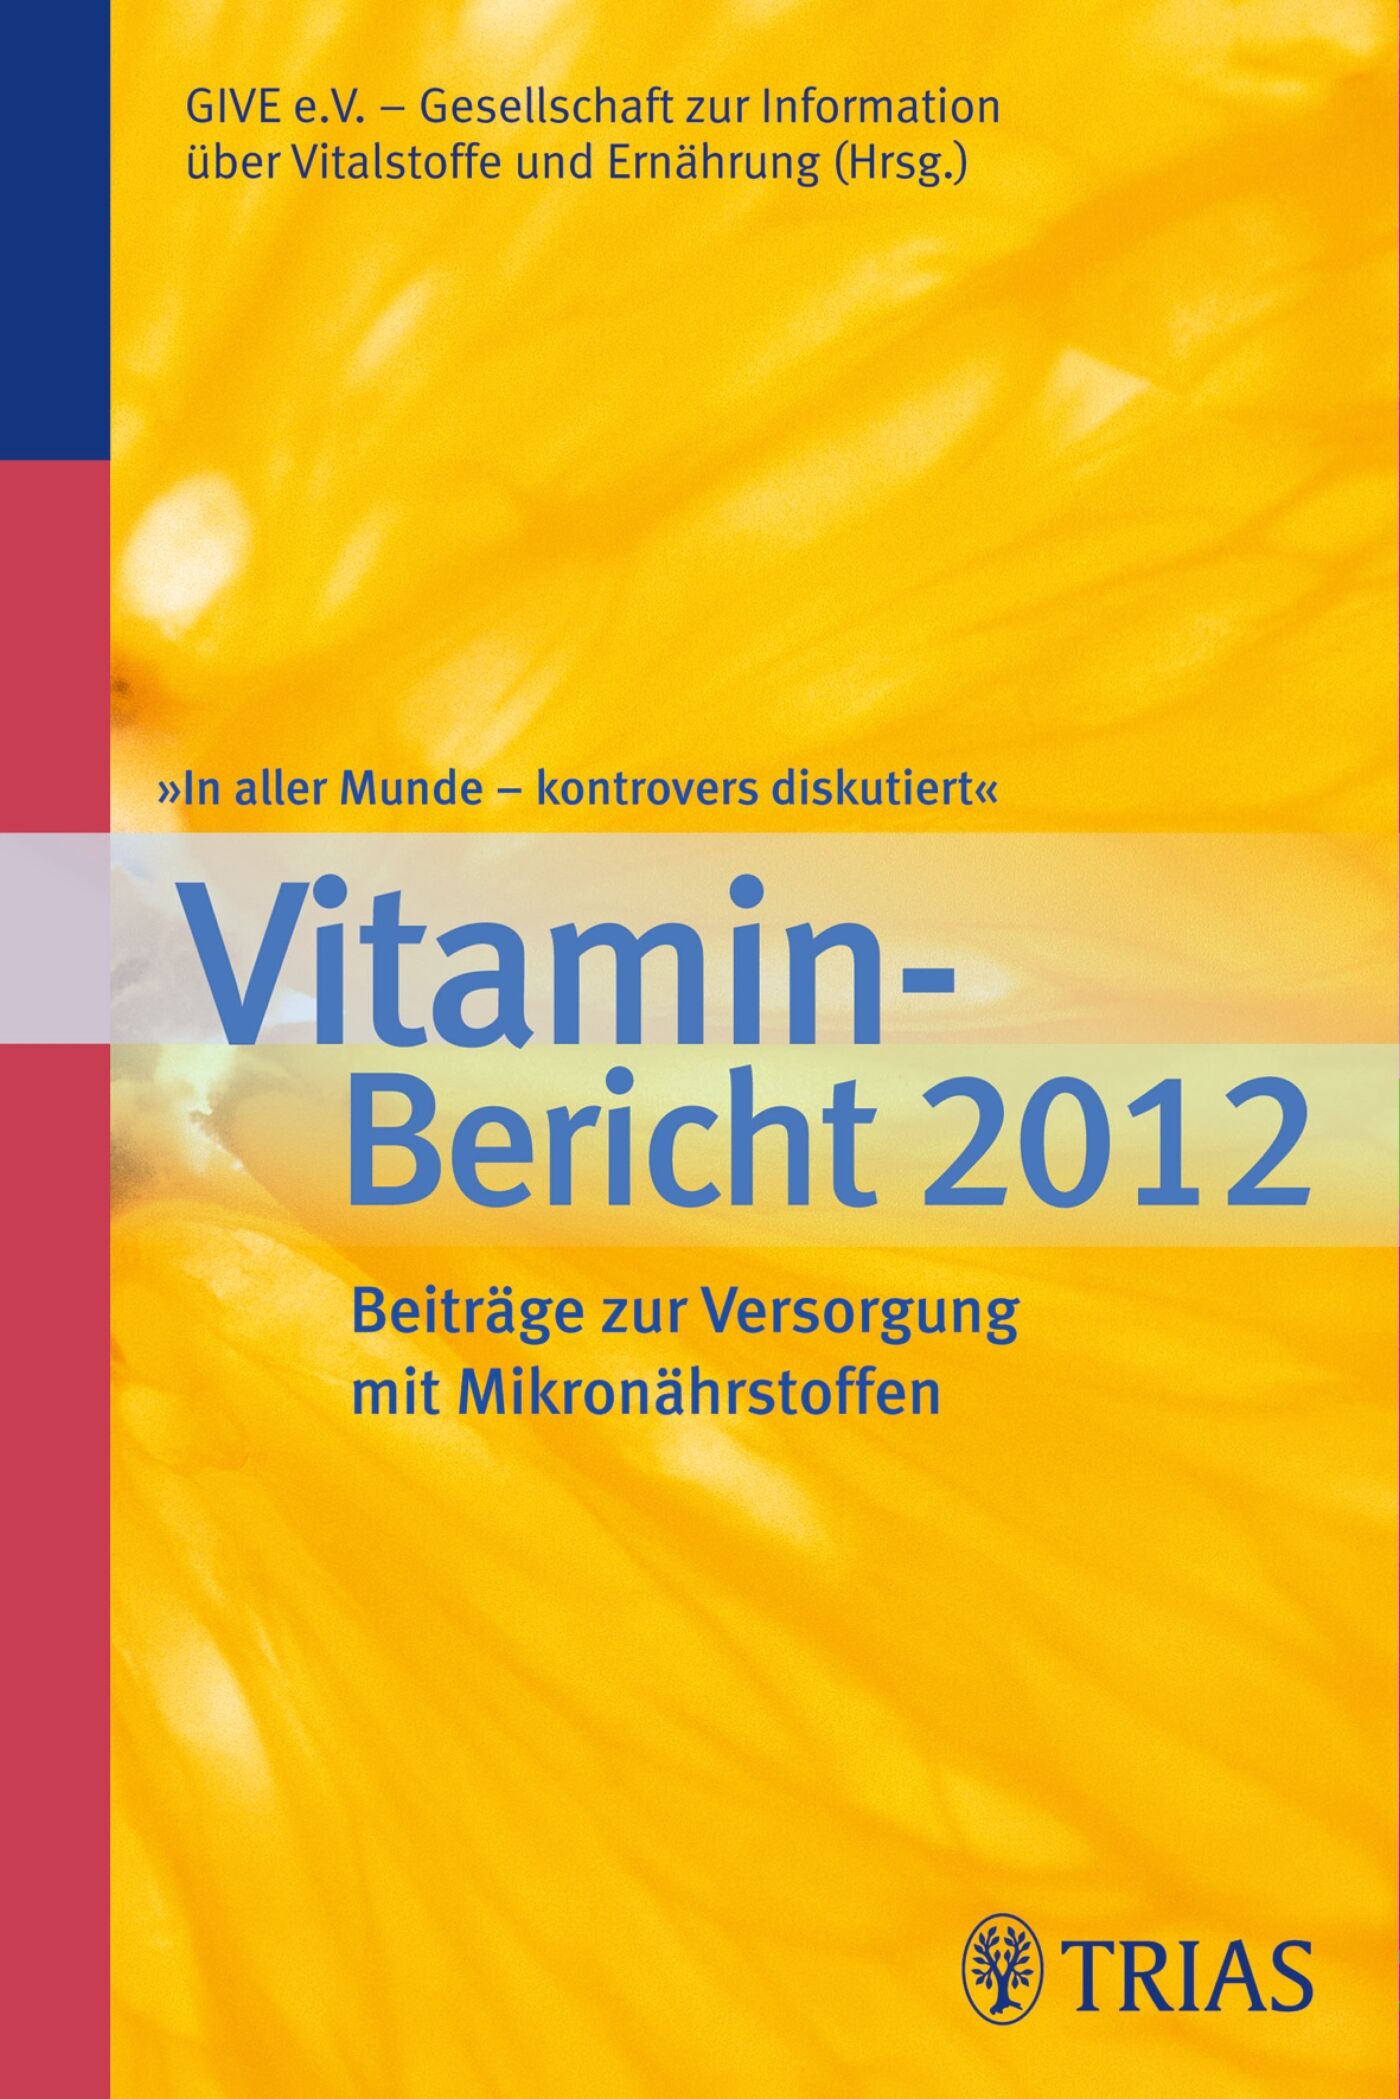 In aller Munde - kontrovers diskutiert, Vitamin-Bericht 2012, 9783830467595